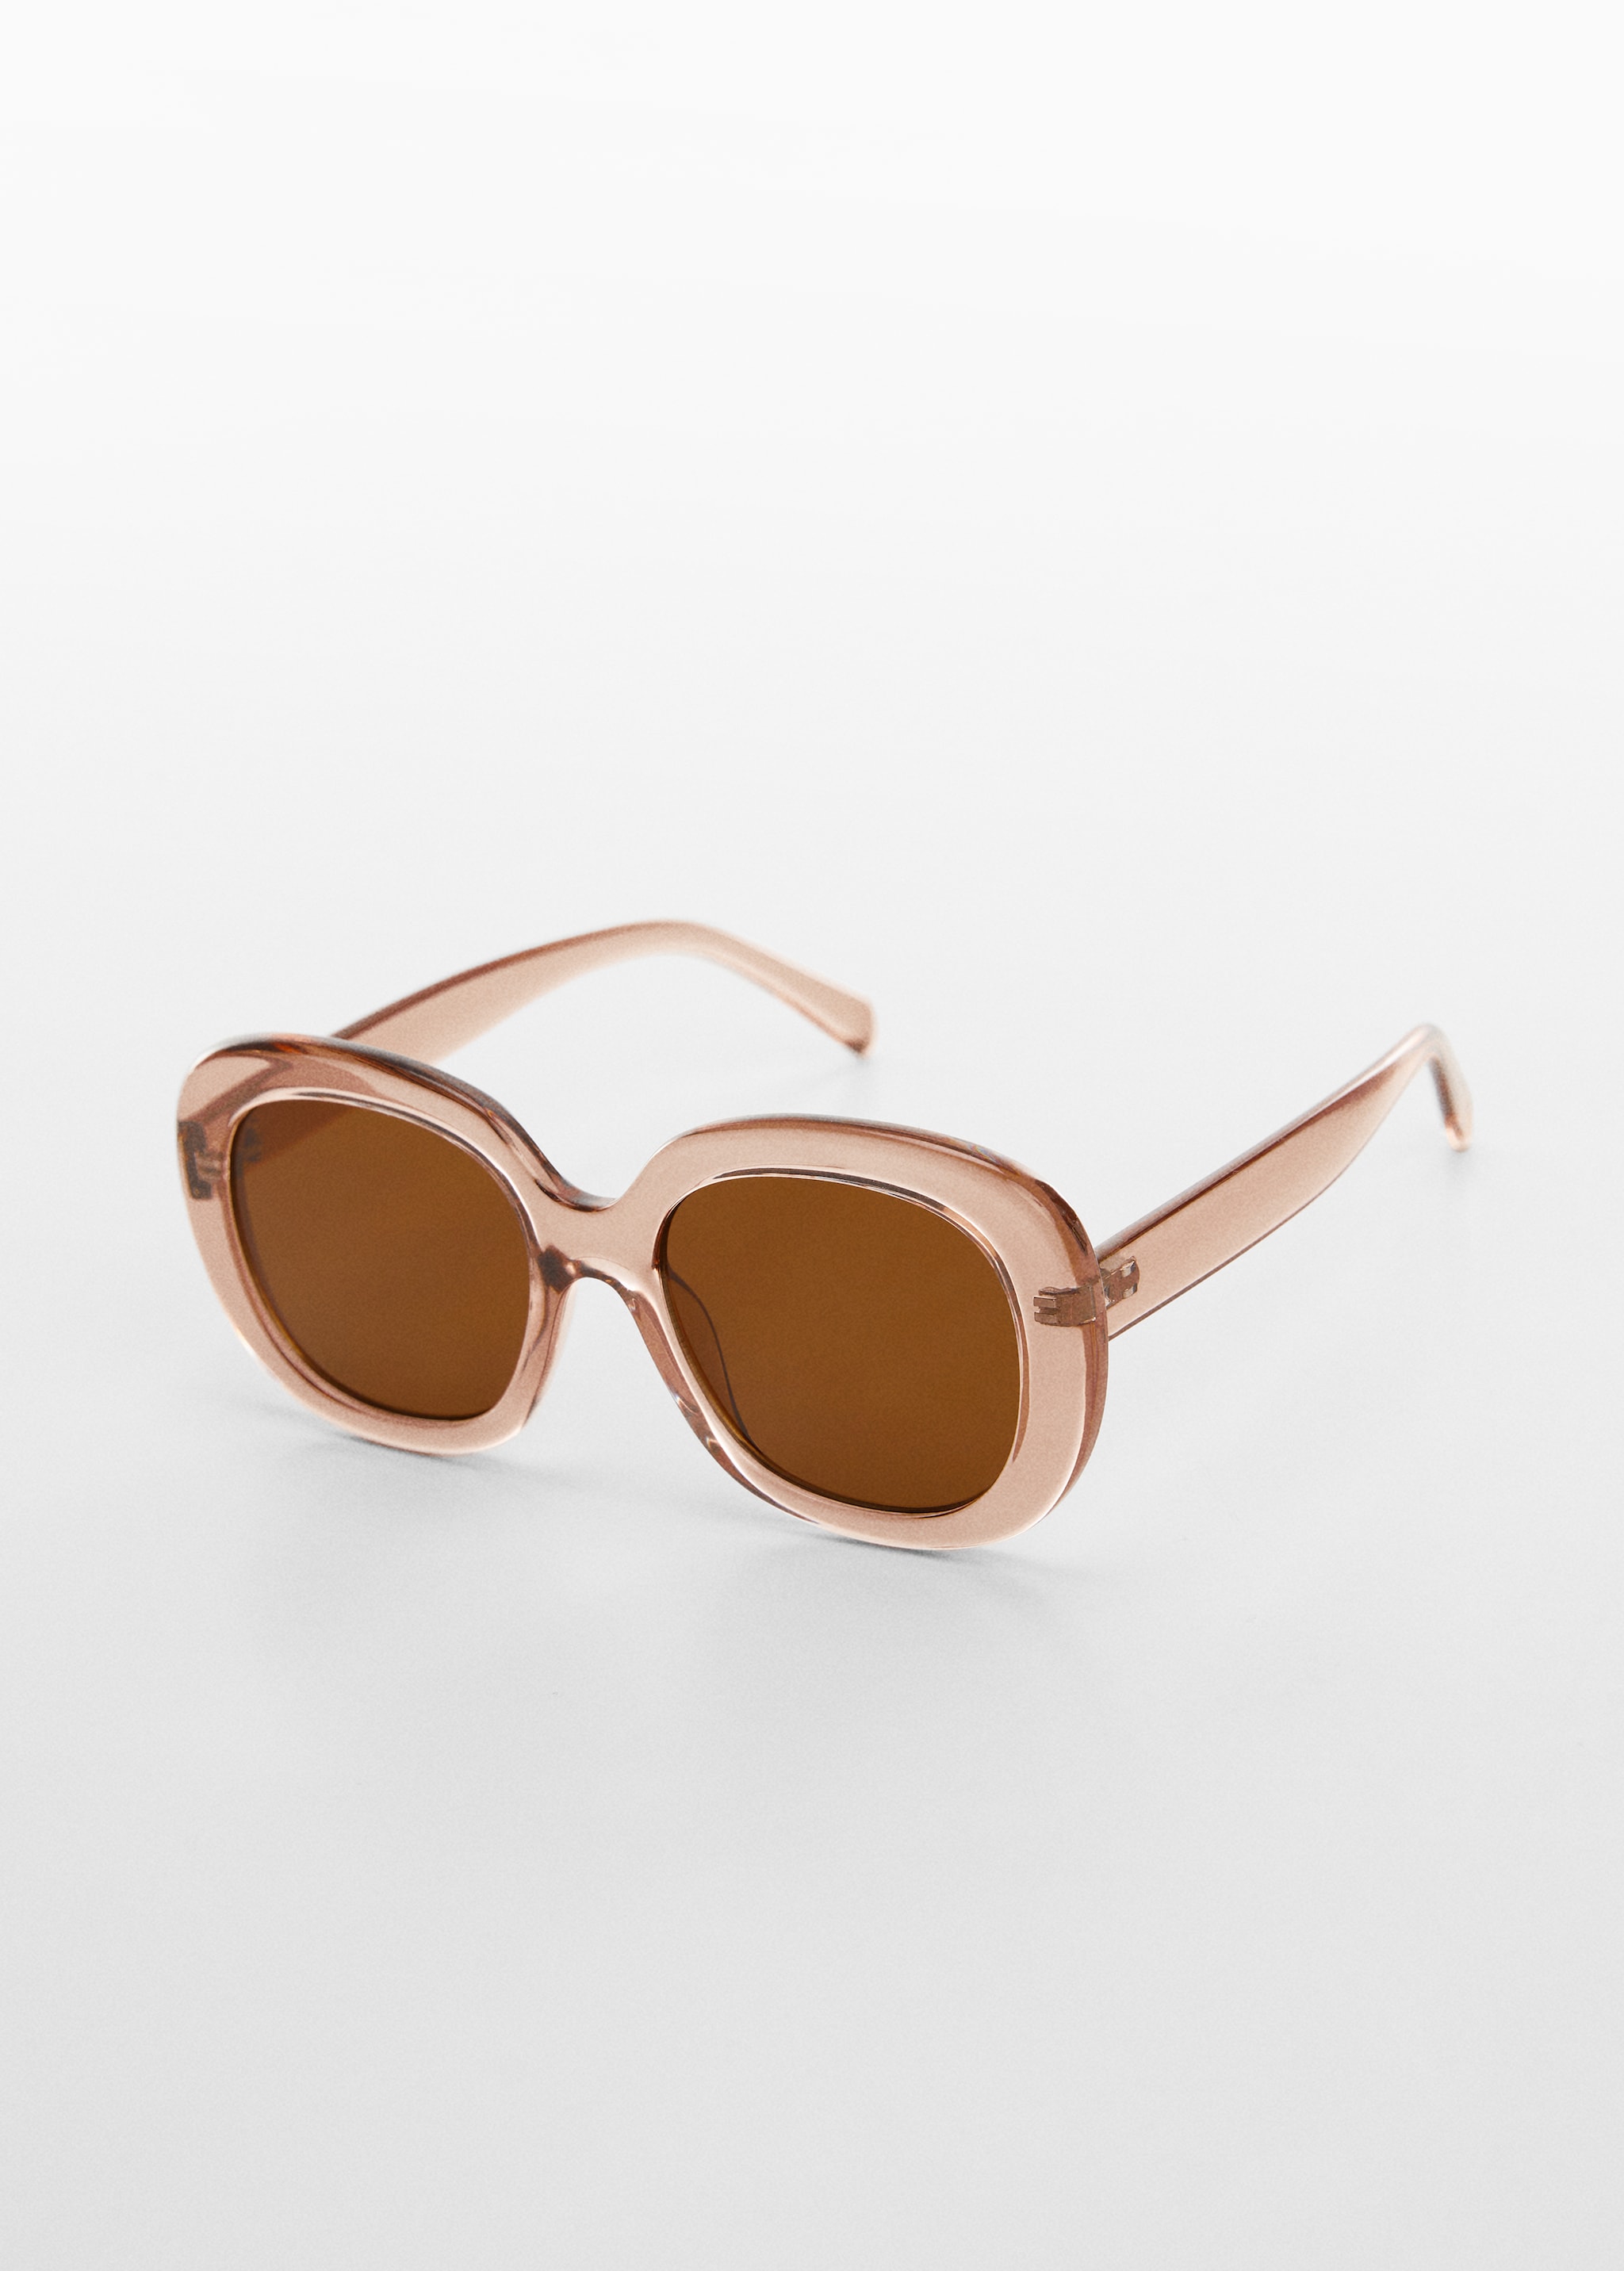 Maxi-frame sunglasses - Medium plane